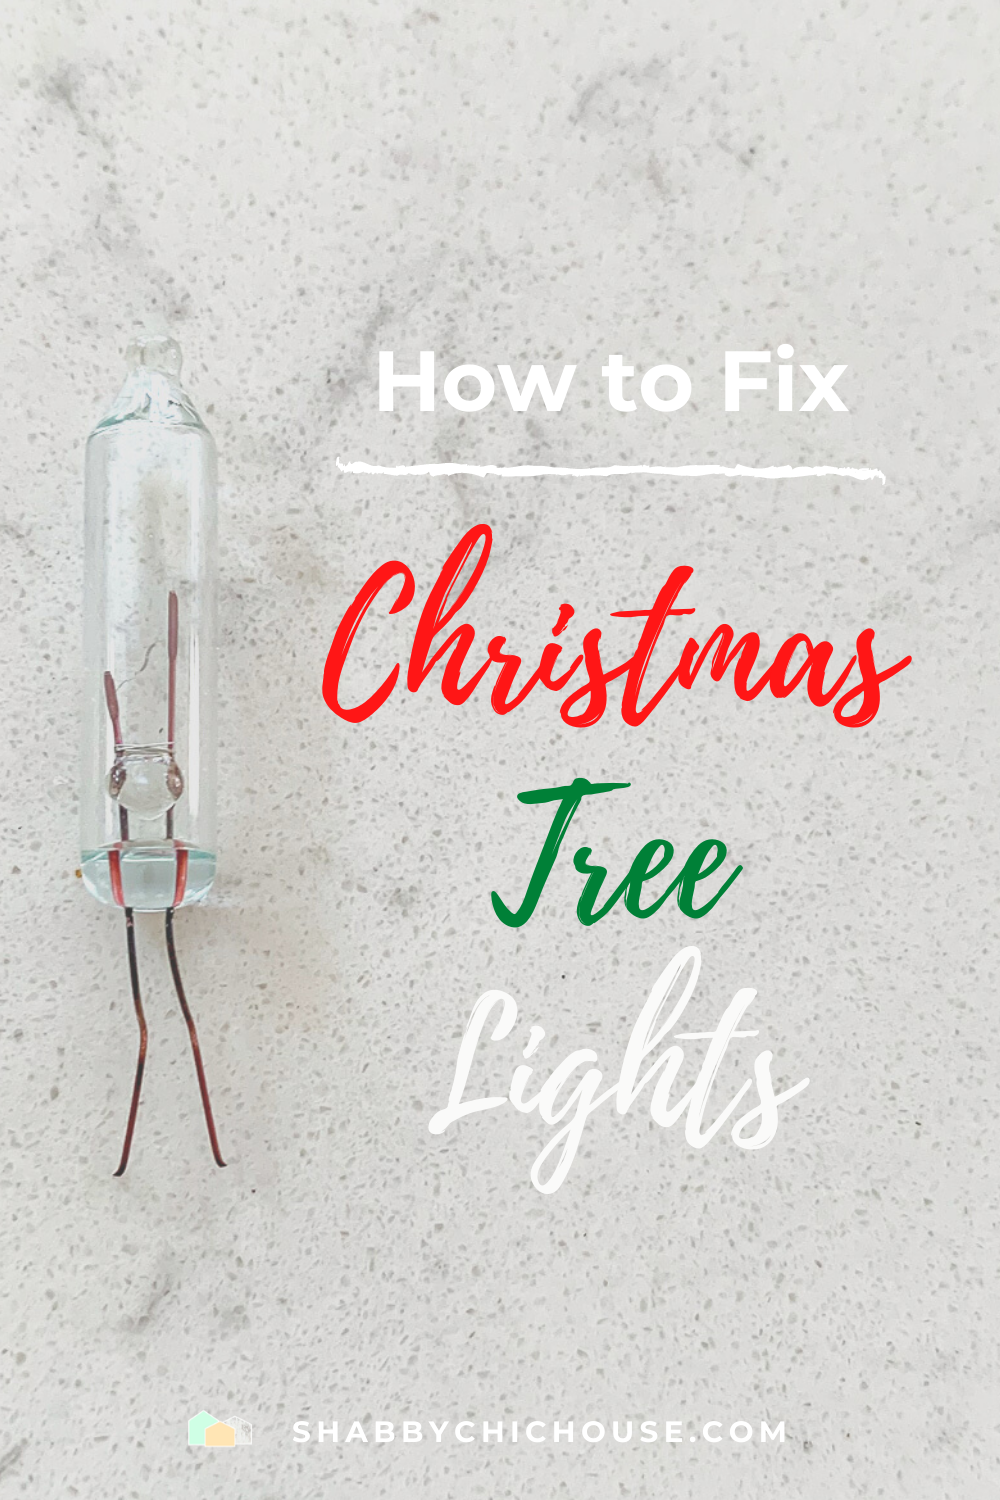 https://shabbychichouse.com/wp-content/uploads/2021/12/Fix-Christmas-Tree-Lights.png